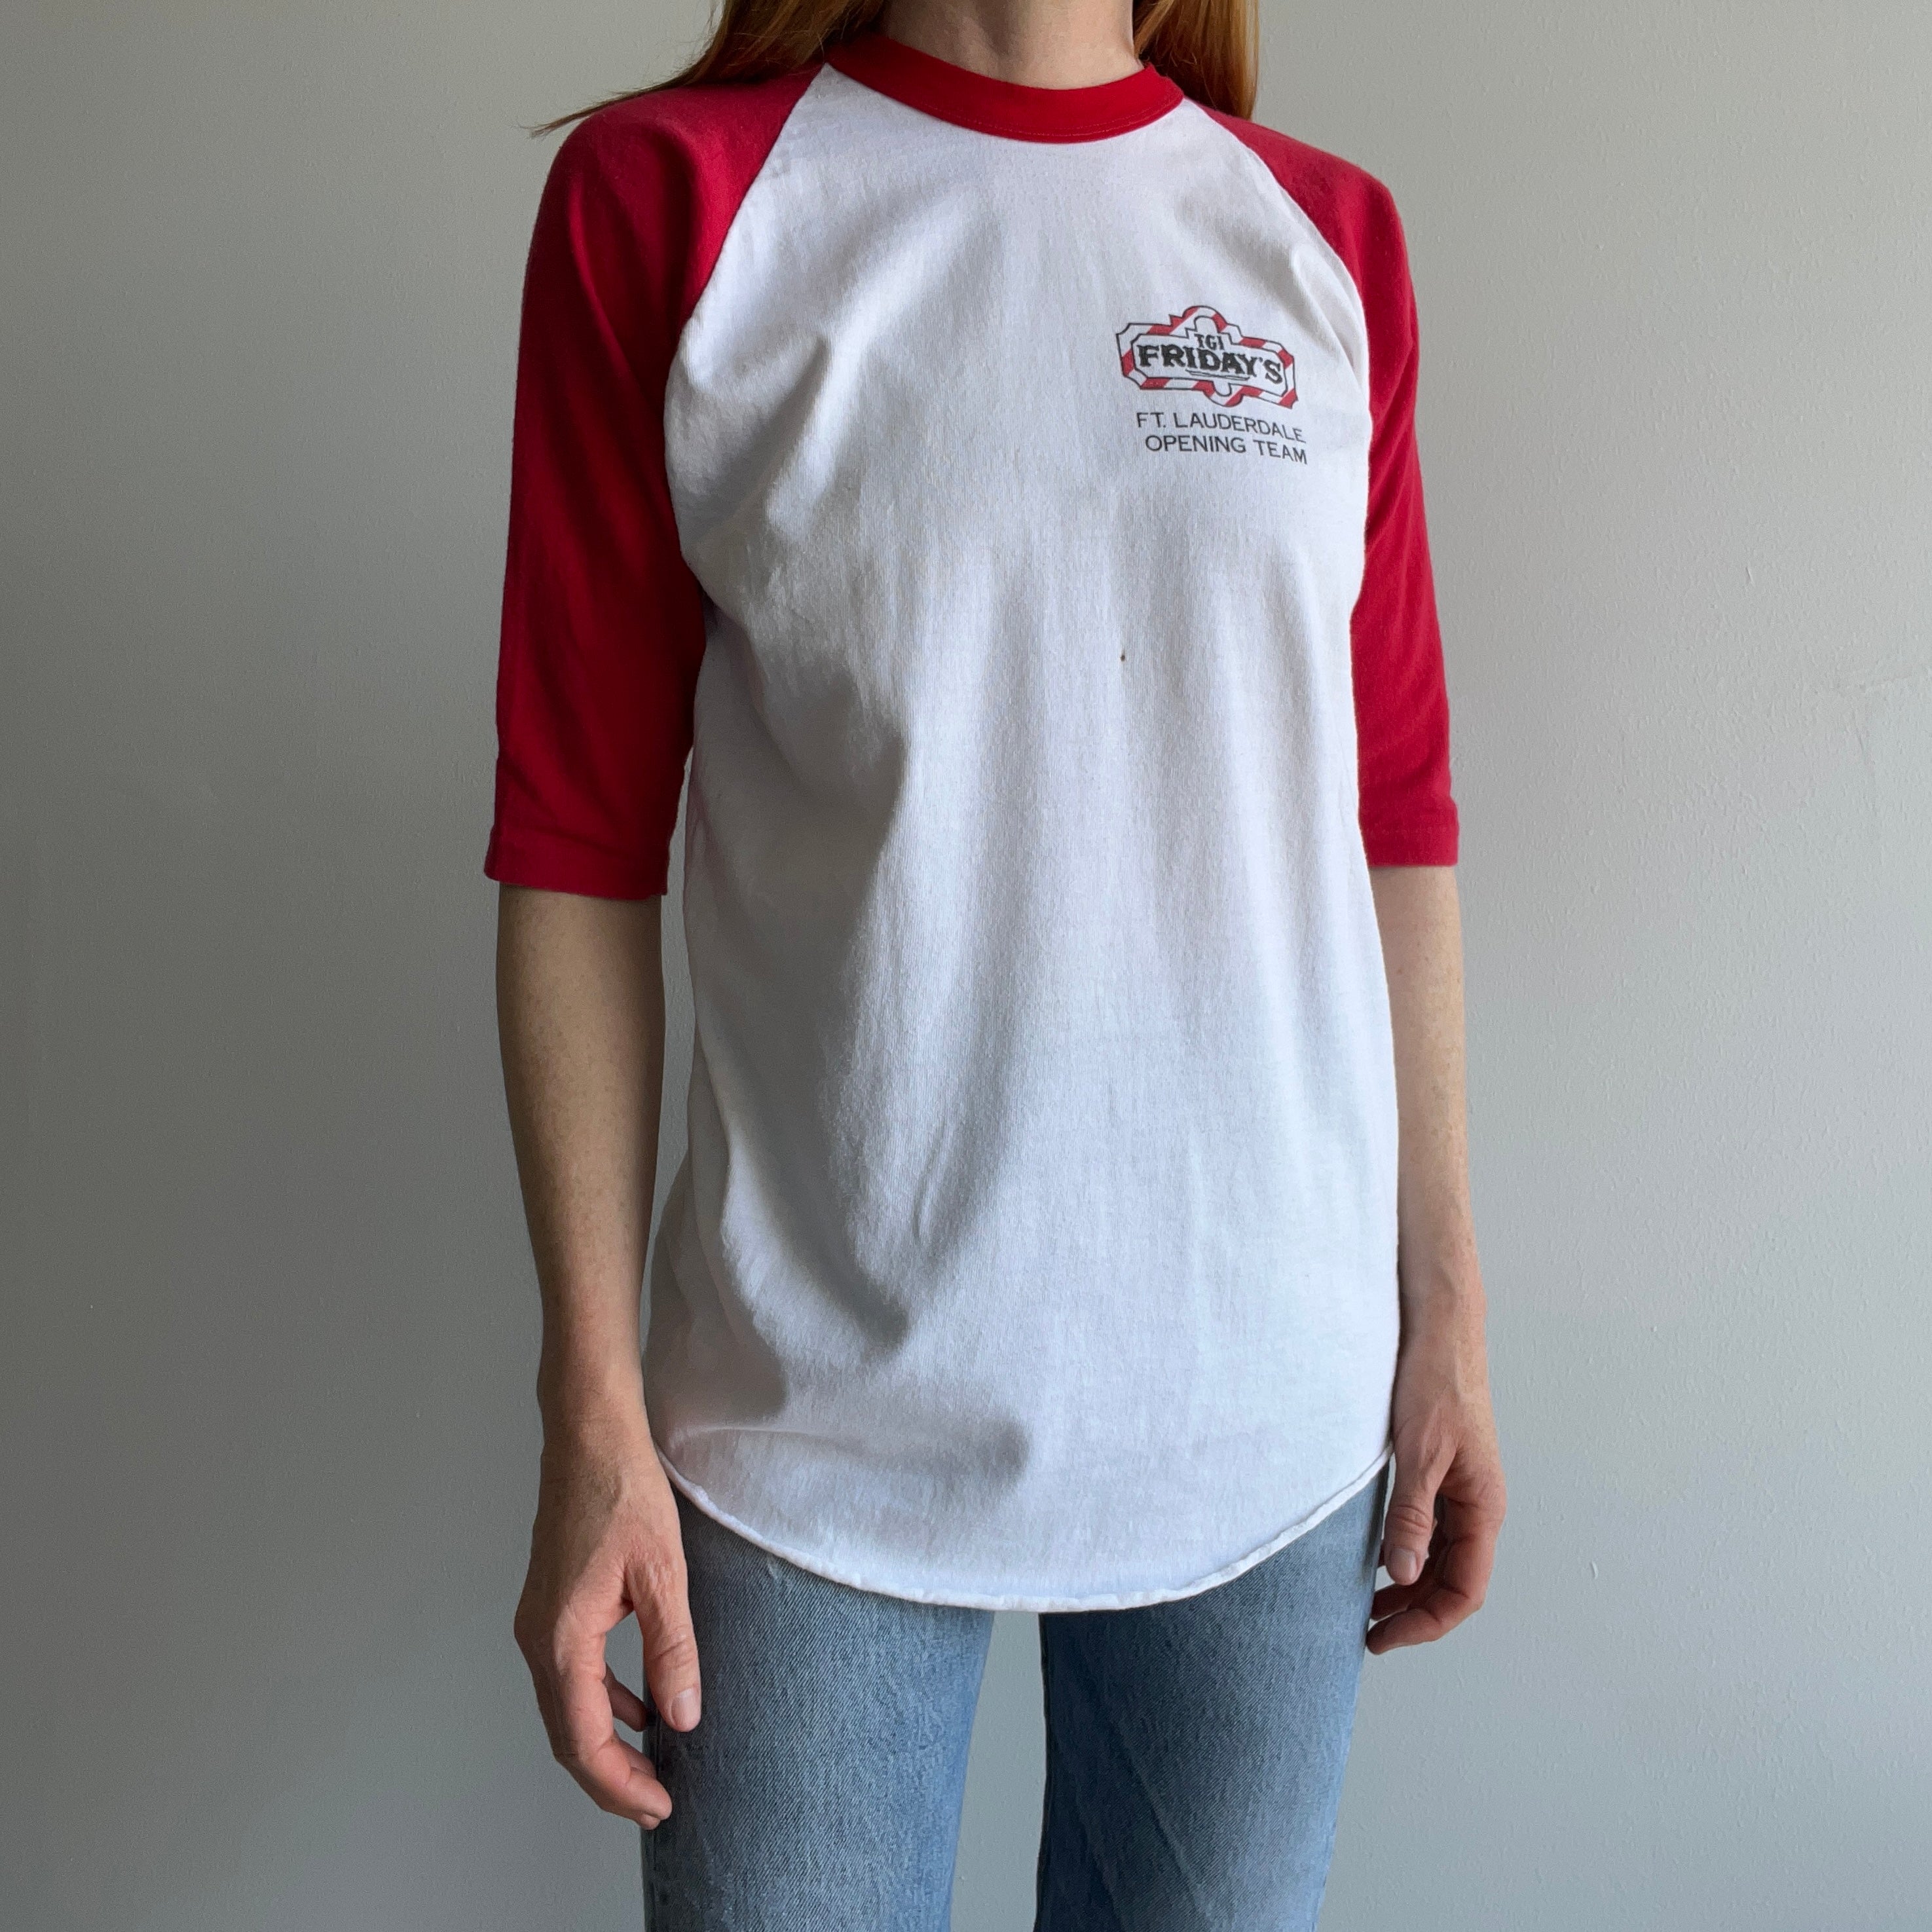 1980s TGIF Fridat\ys Front and Back Baseball T-Shirt